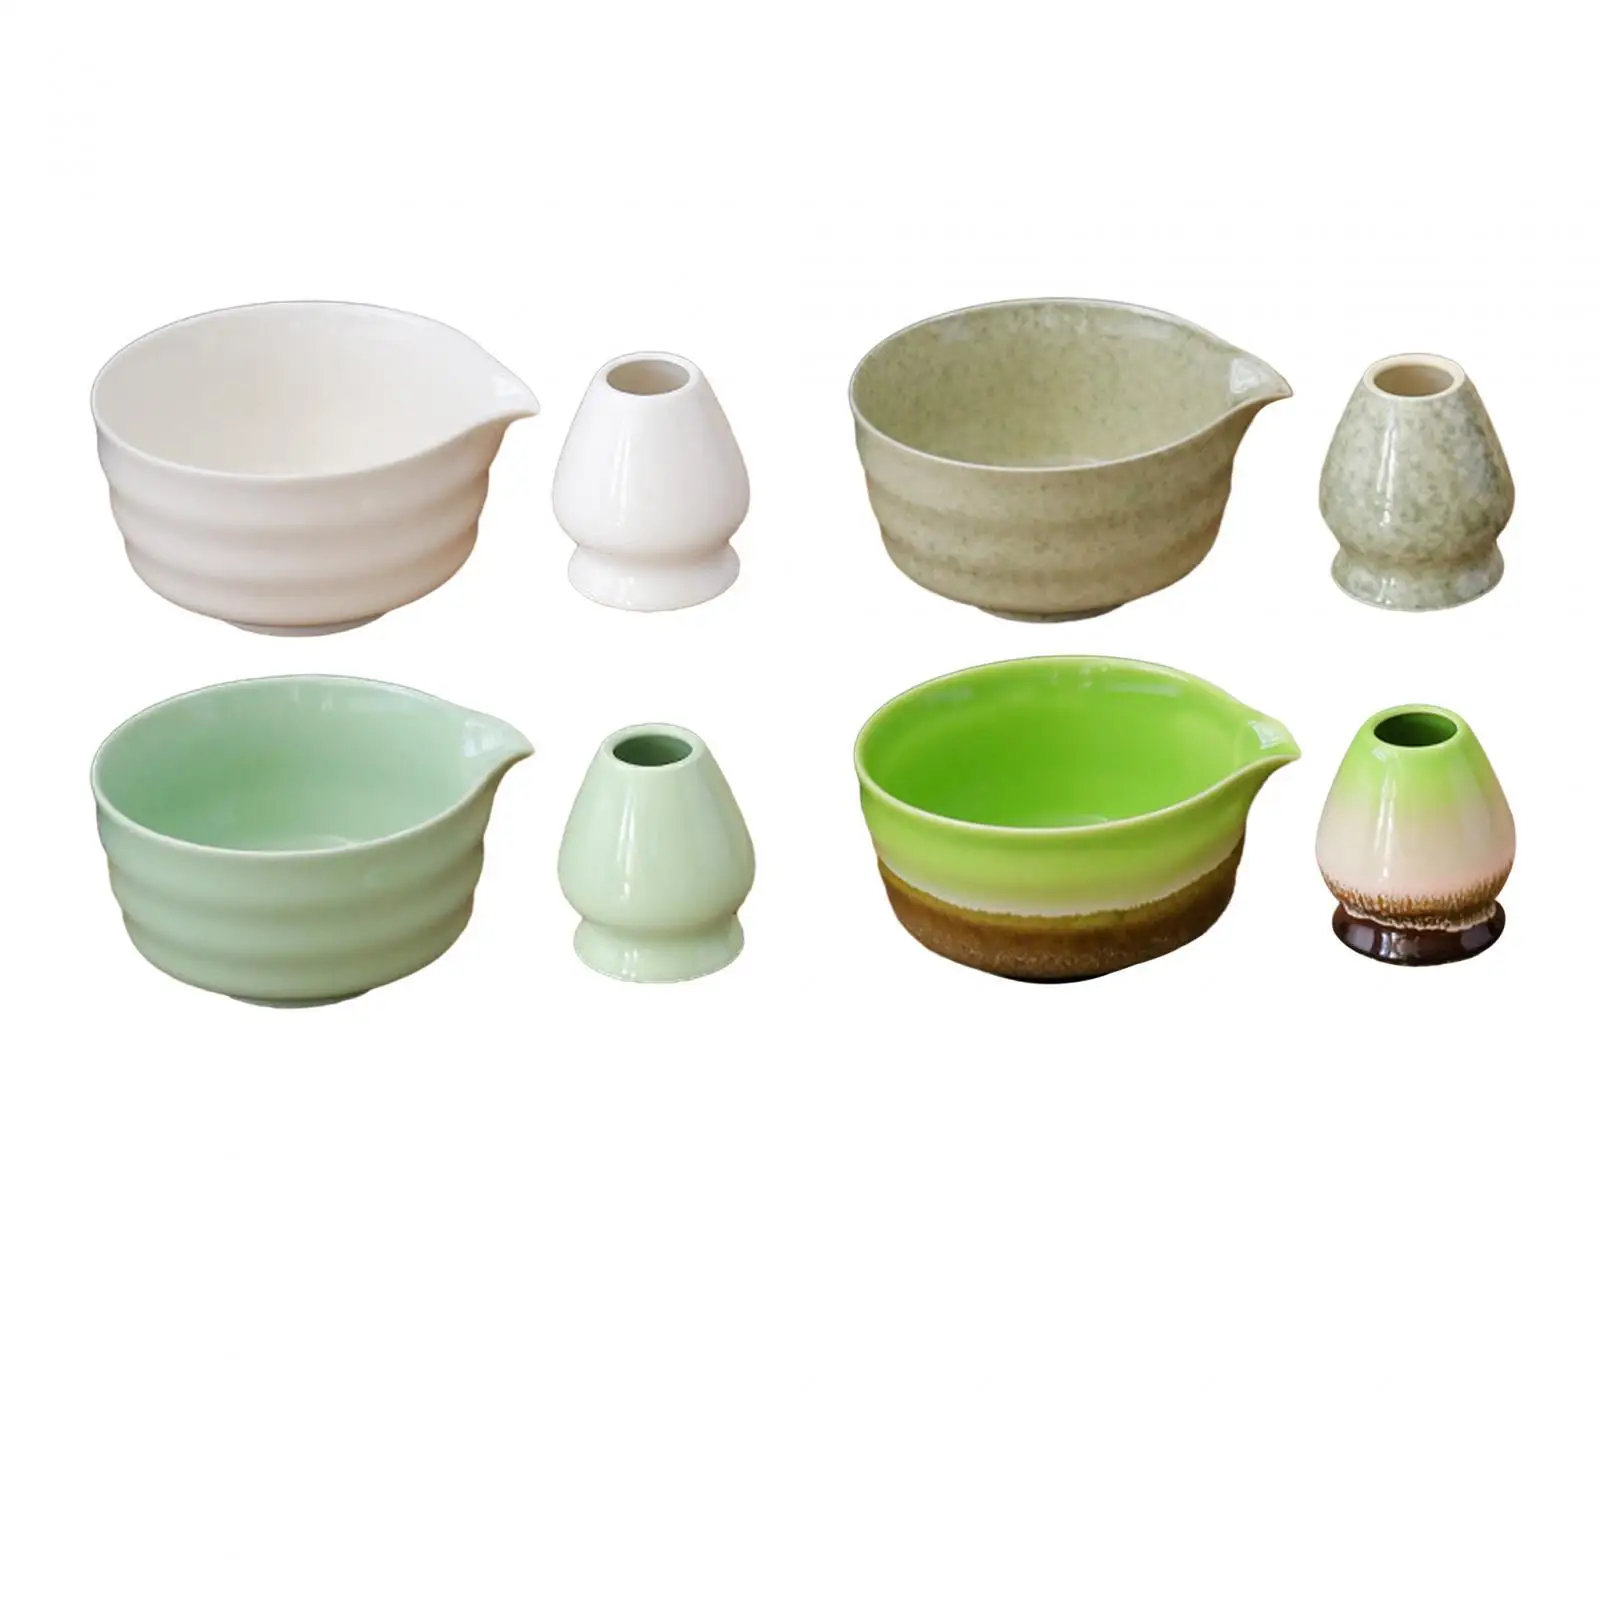 2x Matcha Ceramic Bowl and Whisk Holder Portable Whisk Tea Bowl for Family Beginner Friends Japanese Matcha Preparation Matcha